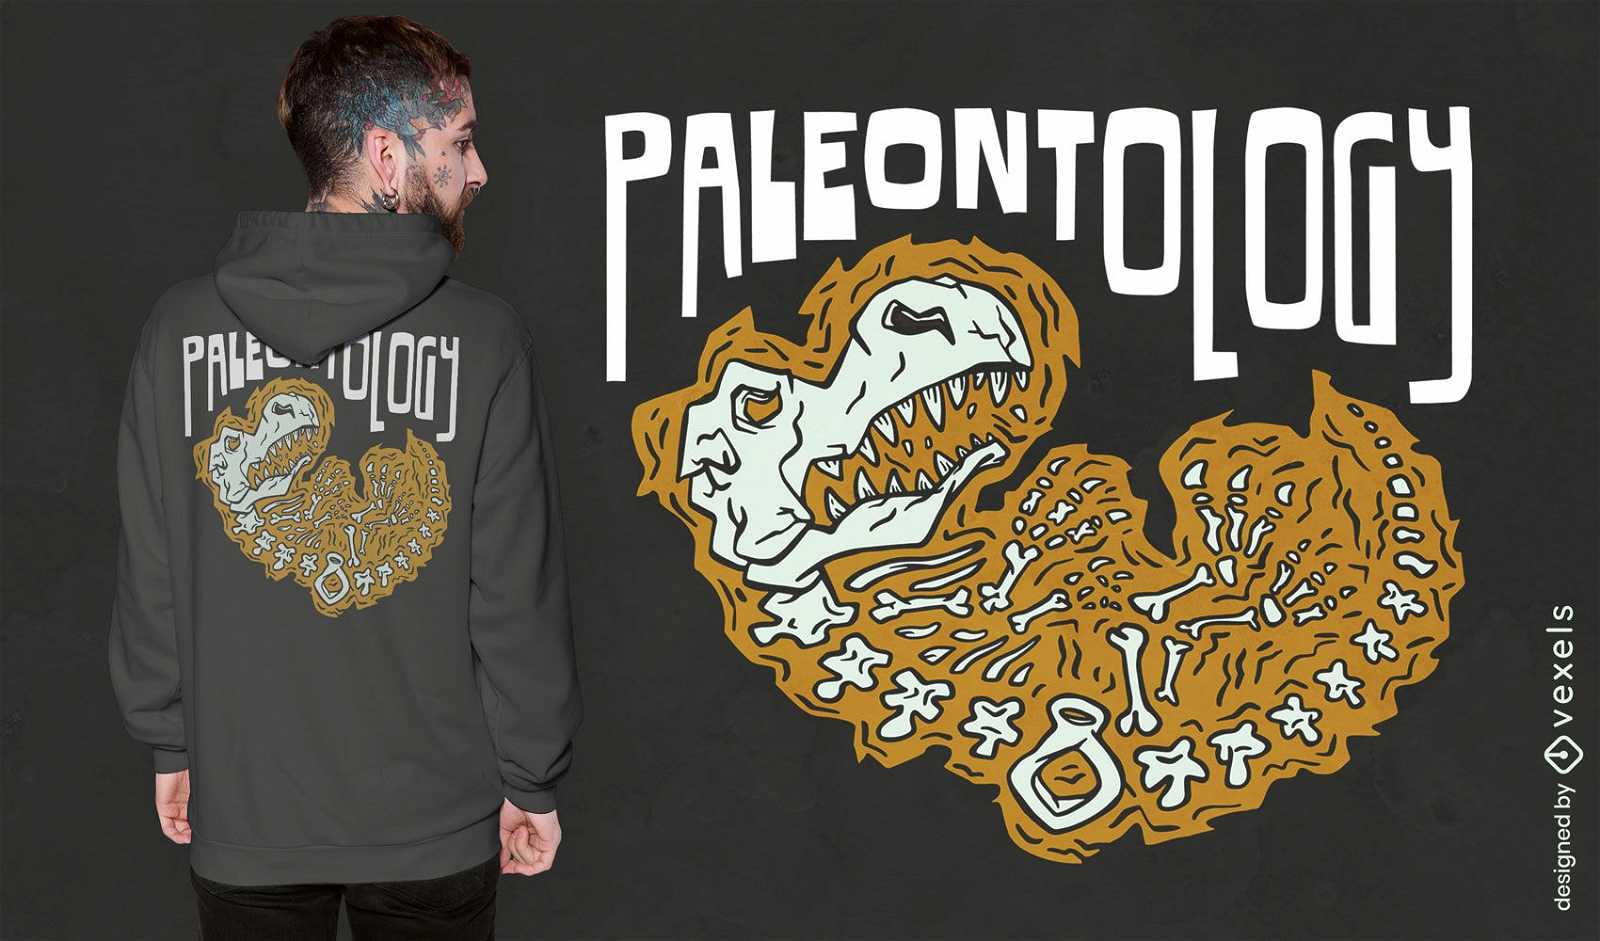 Dise?o de camiseta de esqueleto y huesos de dinosaurio.